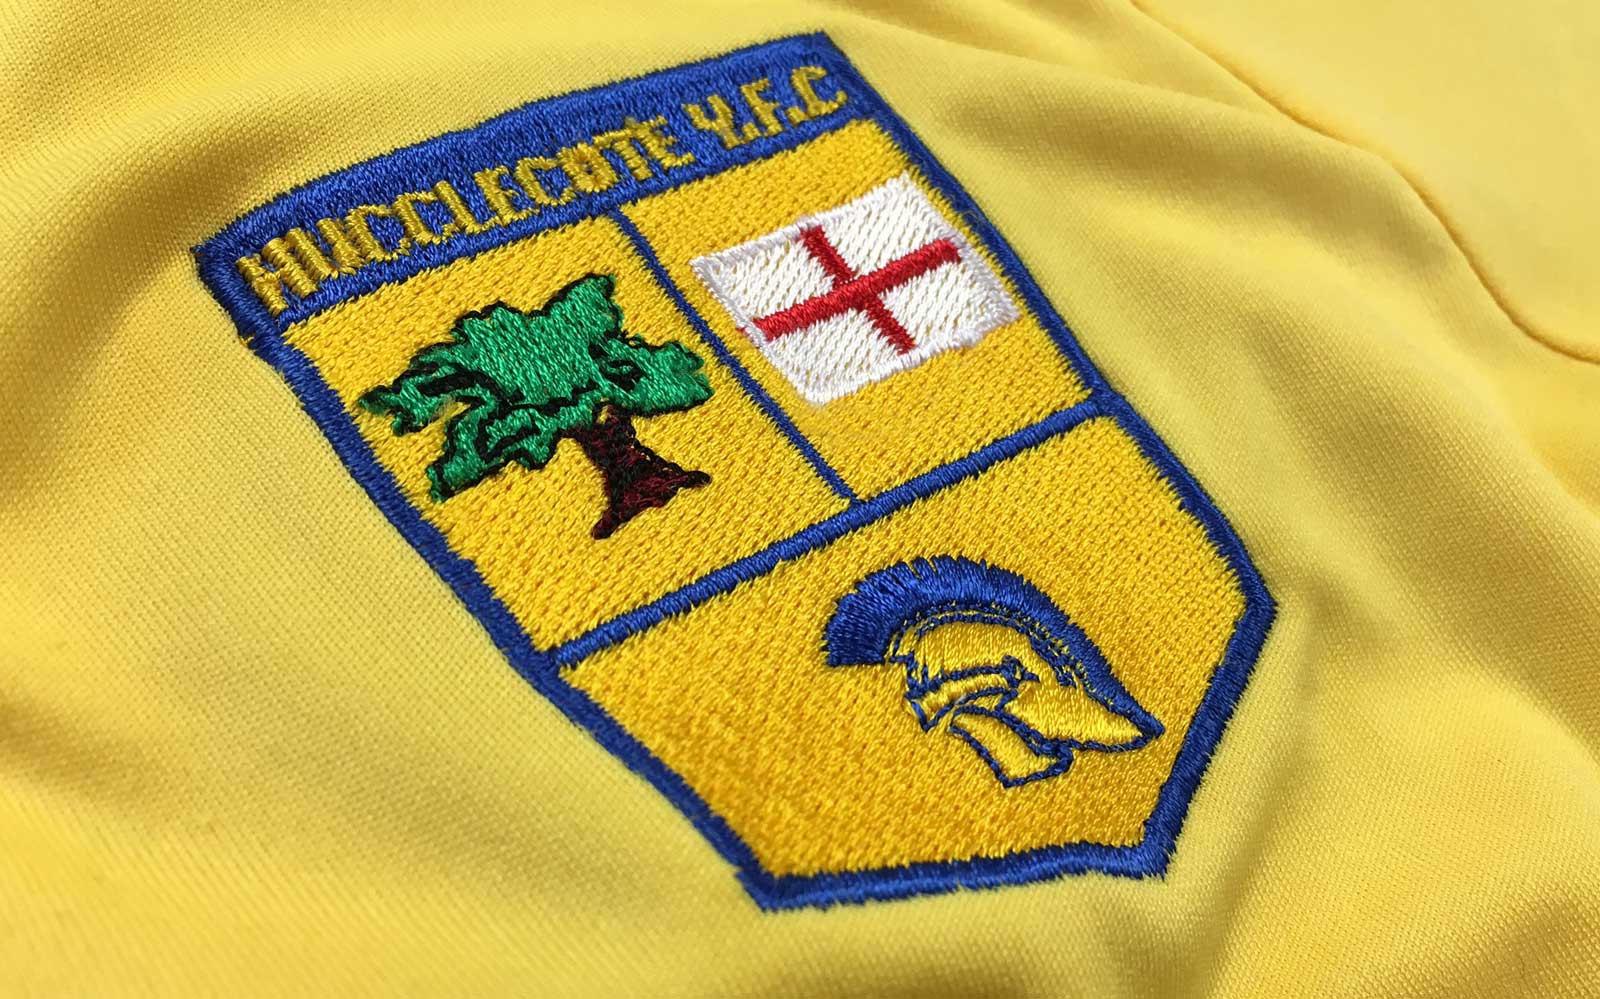 Hucclecote Youth Football Club